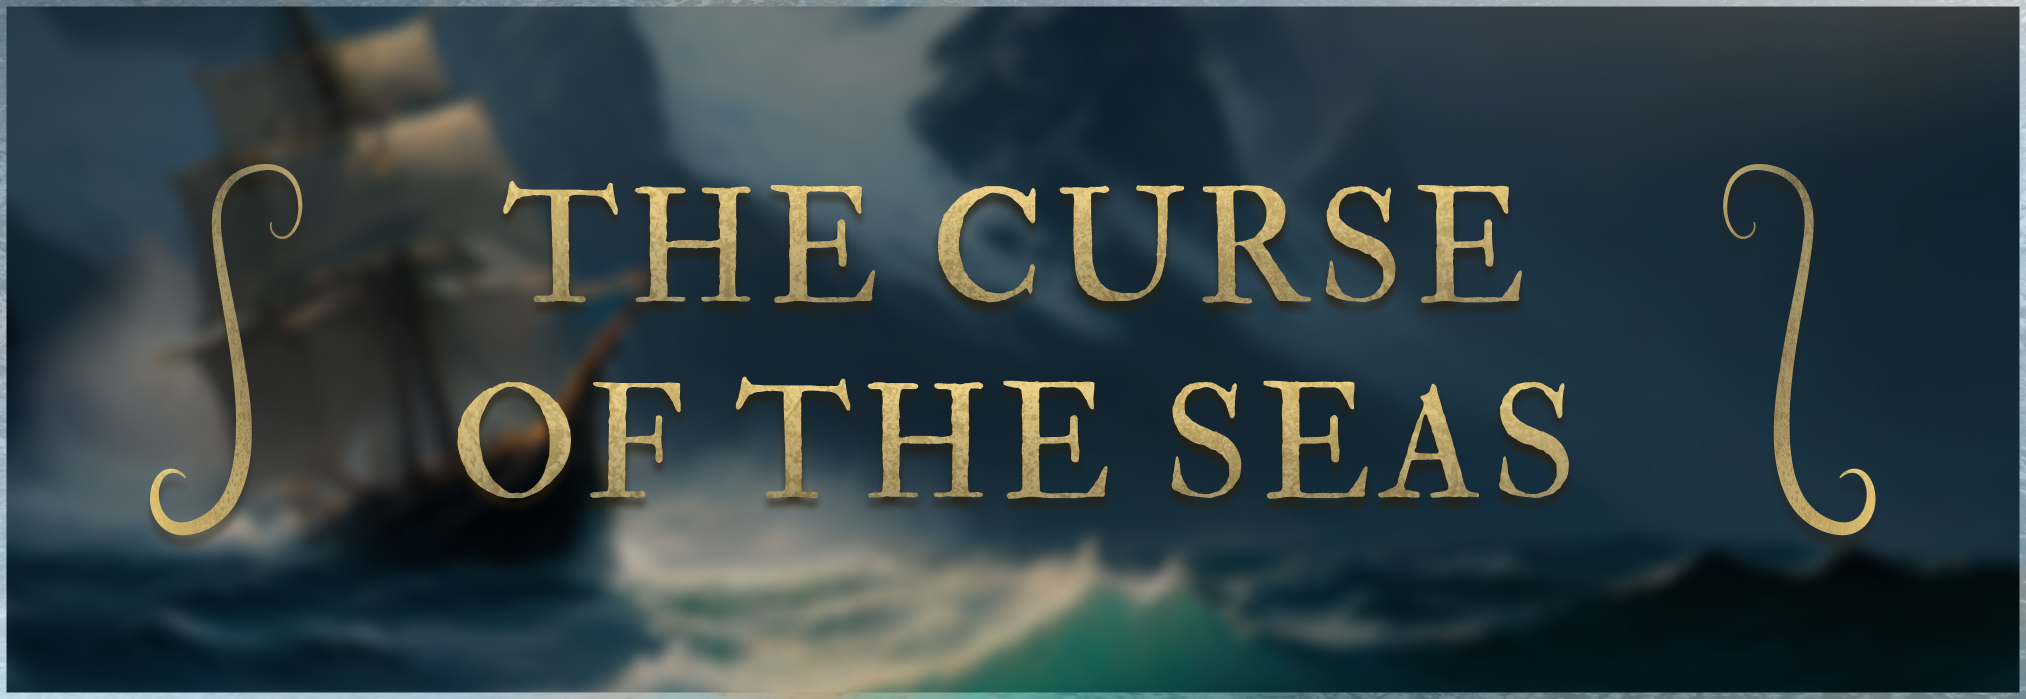 The Curse of the Seas